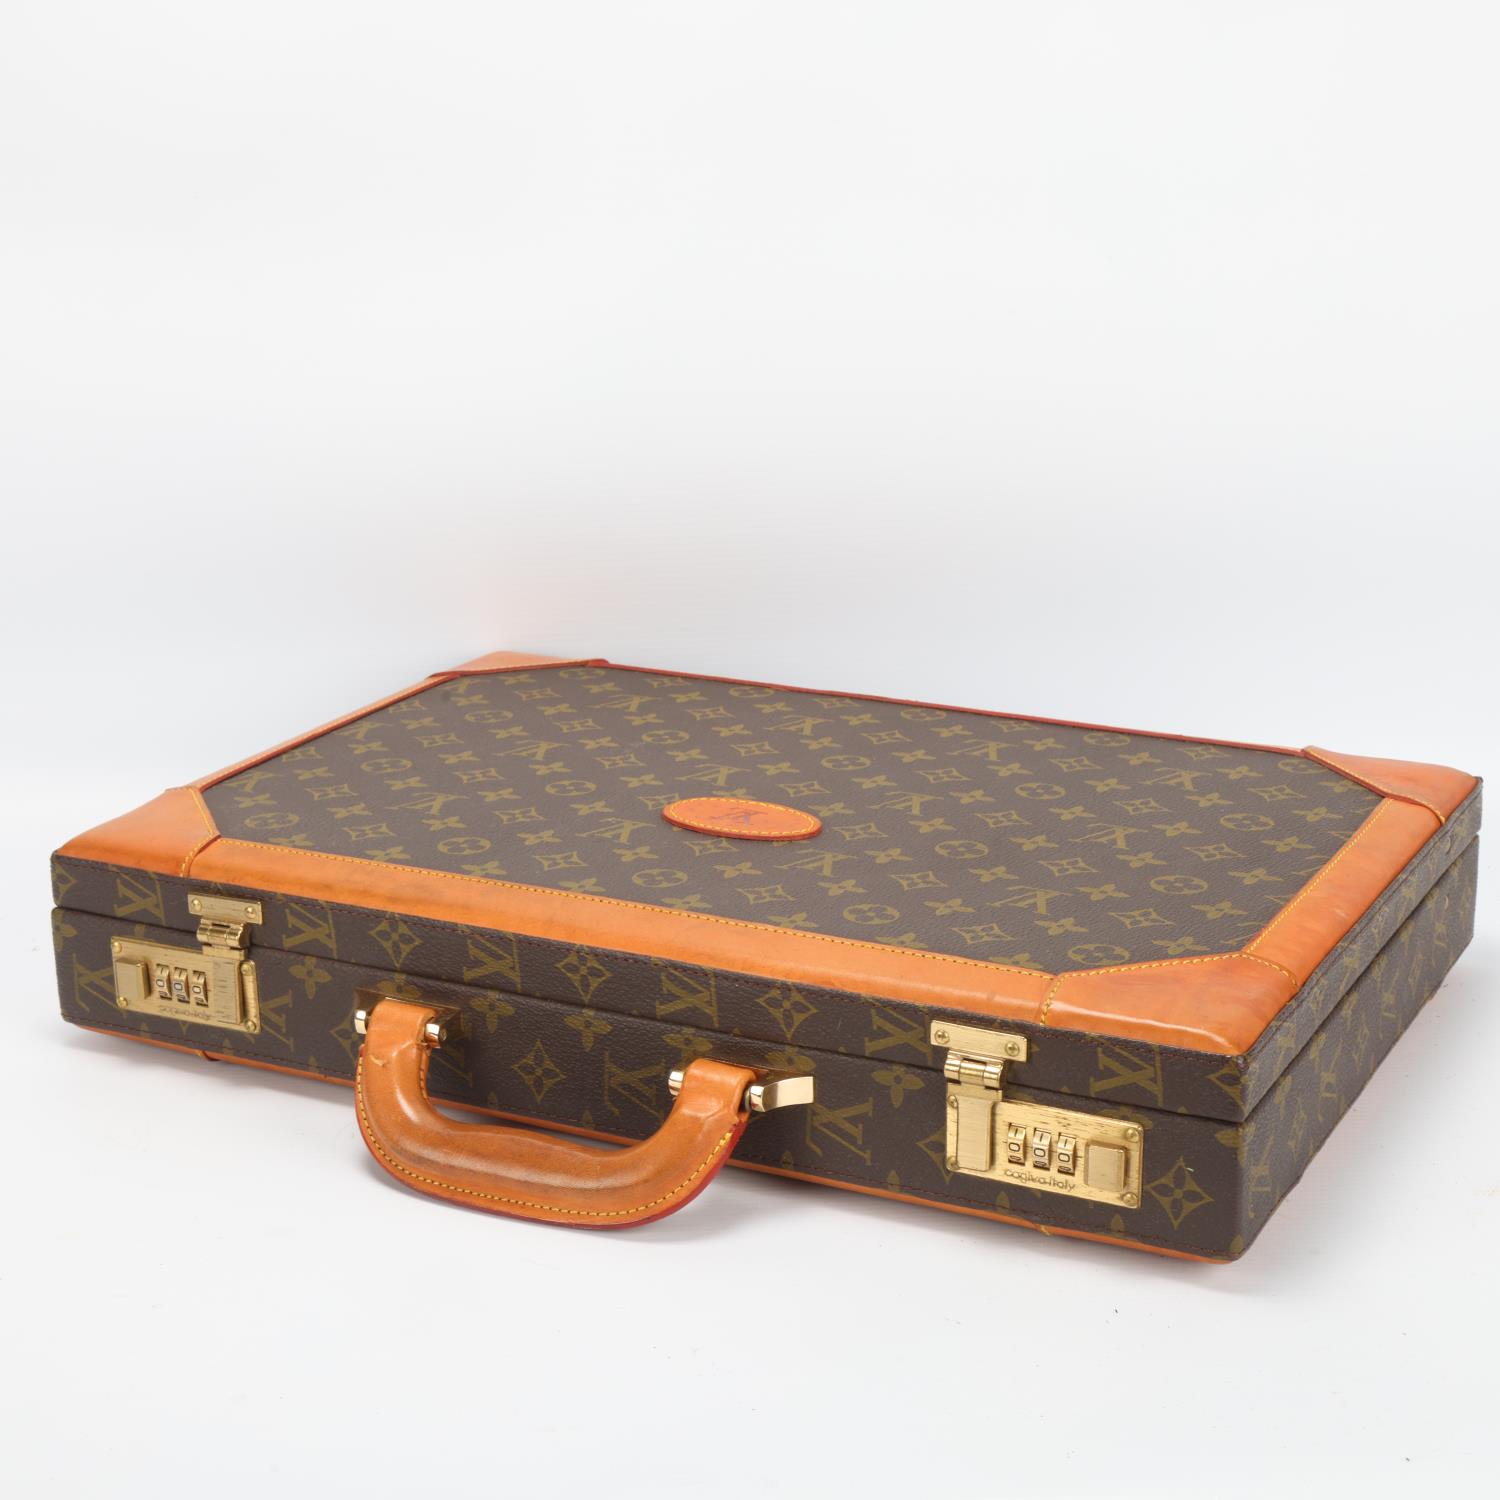 LOUIS VUITTON - leather-bound monogram briefcase, with Gagiva combination locks, 45cm x 30cm x 8cm - Image 2 of 3